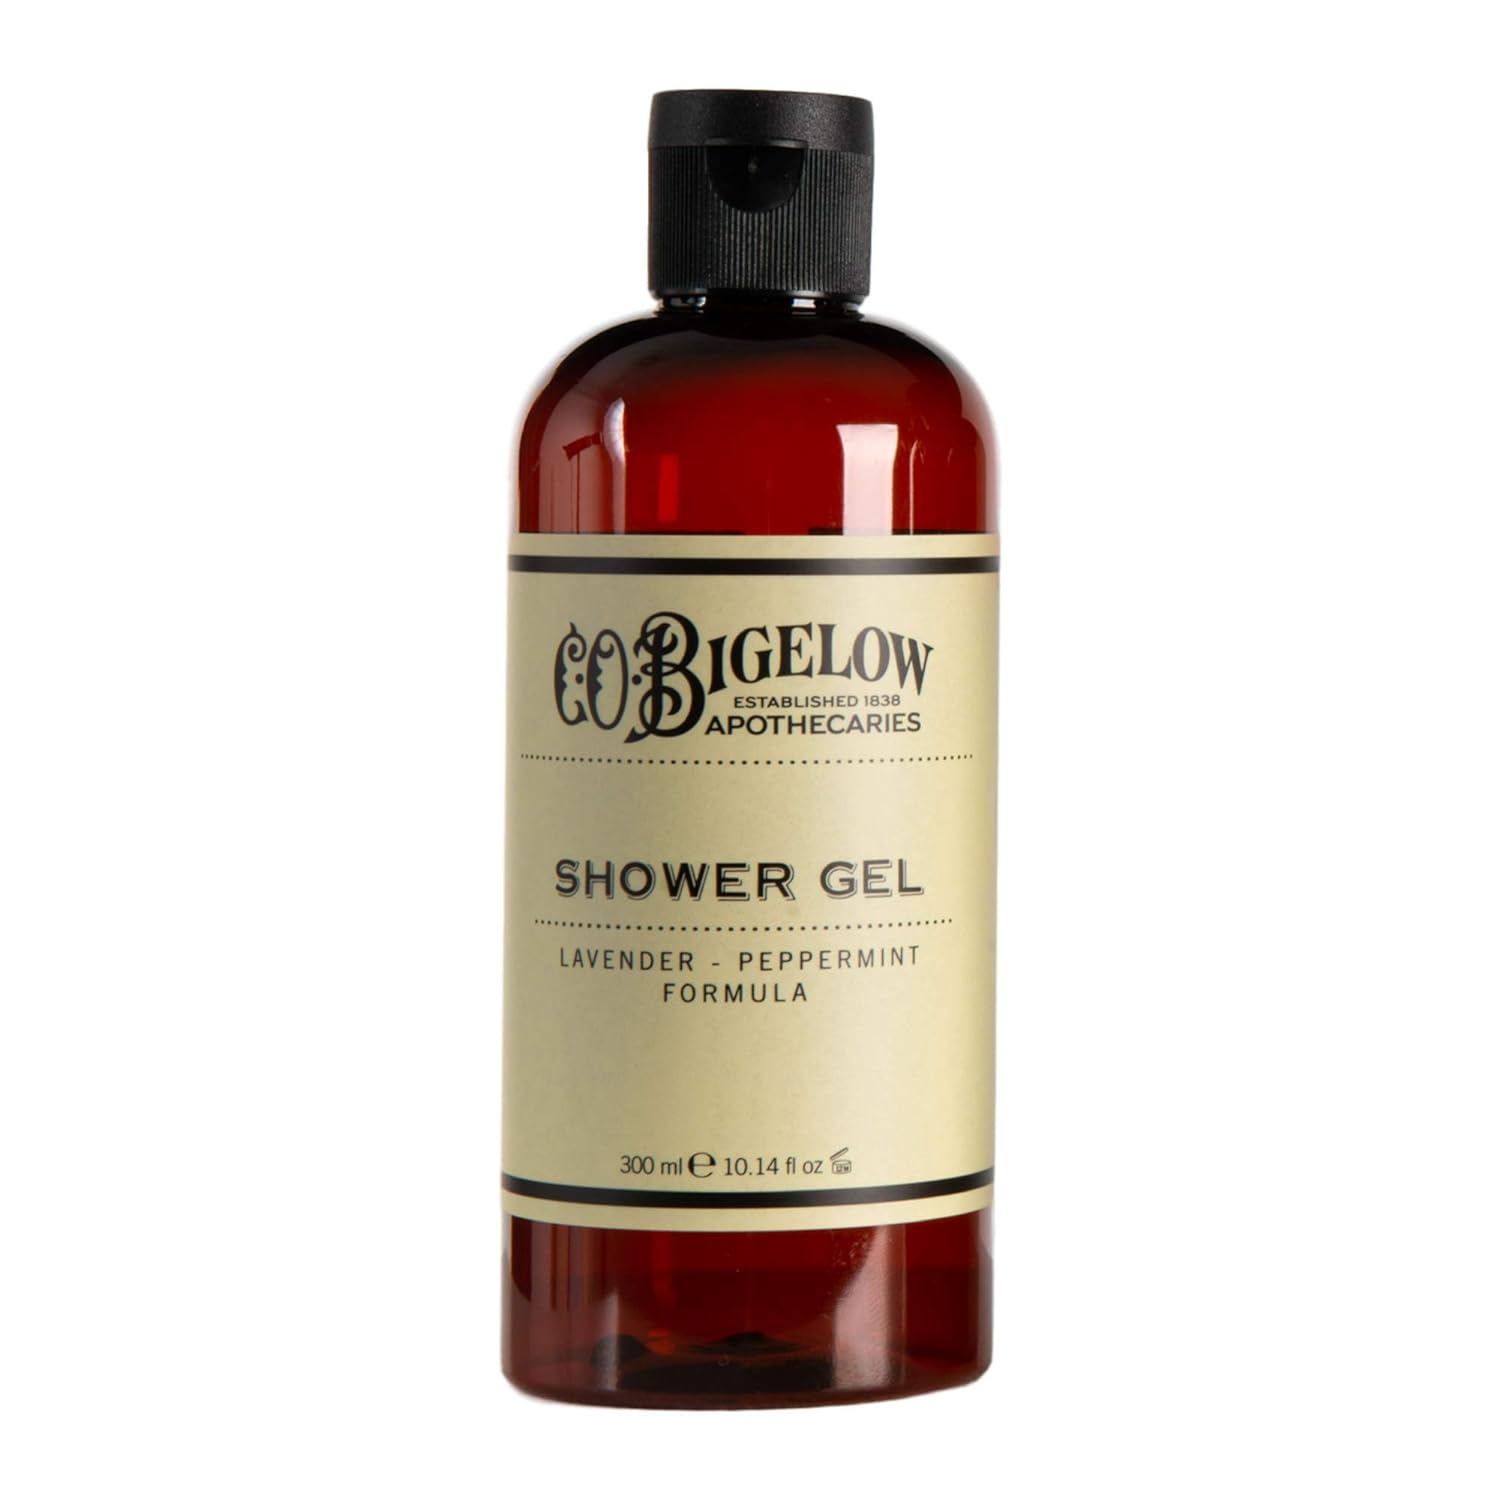 C.O. Bigelow Shower Gel, Lavender Peppermint Body Wash for Women & Men, Skin Soothing Body Cleanser - 10.14